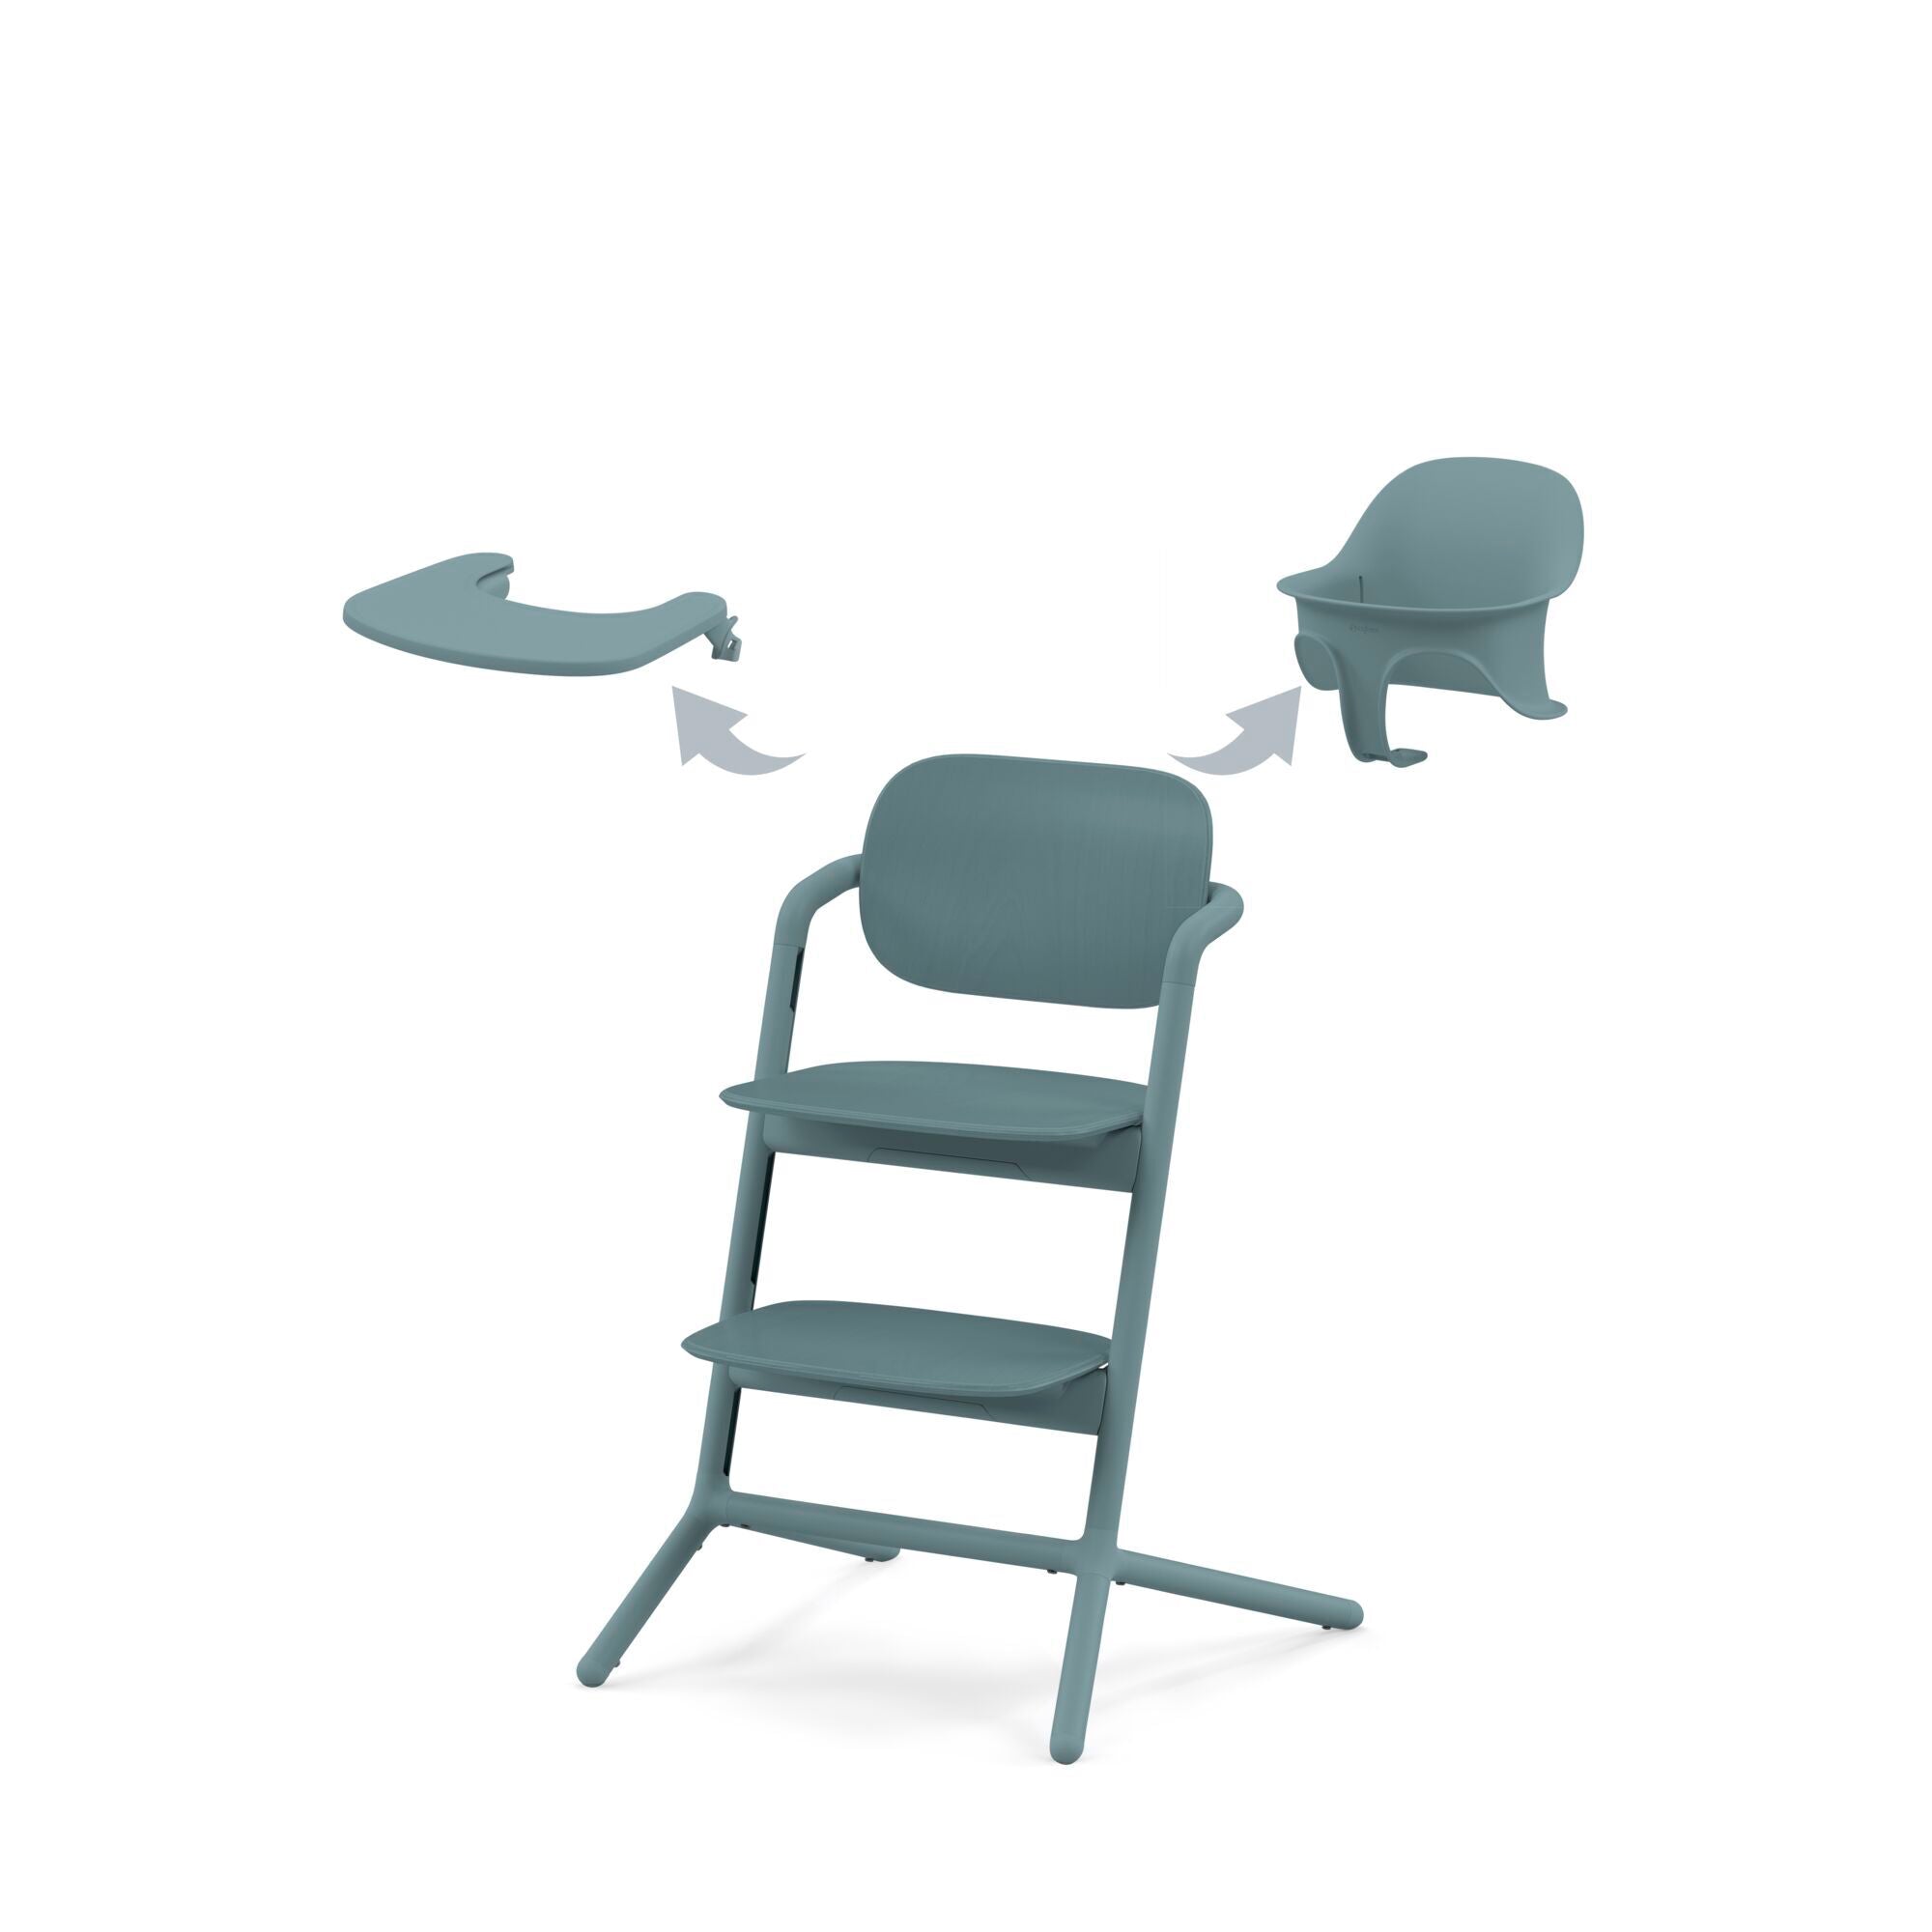 Cybex Lemo 2 High Chair 3-in-1 - ANB Baby -4063846197613$100 - $300